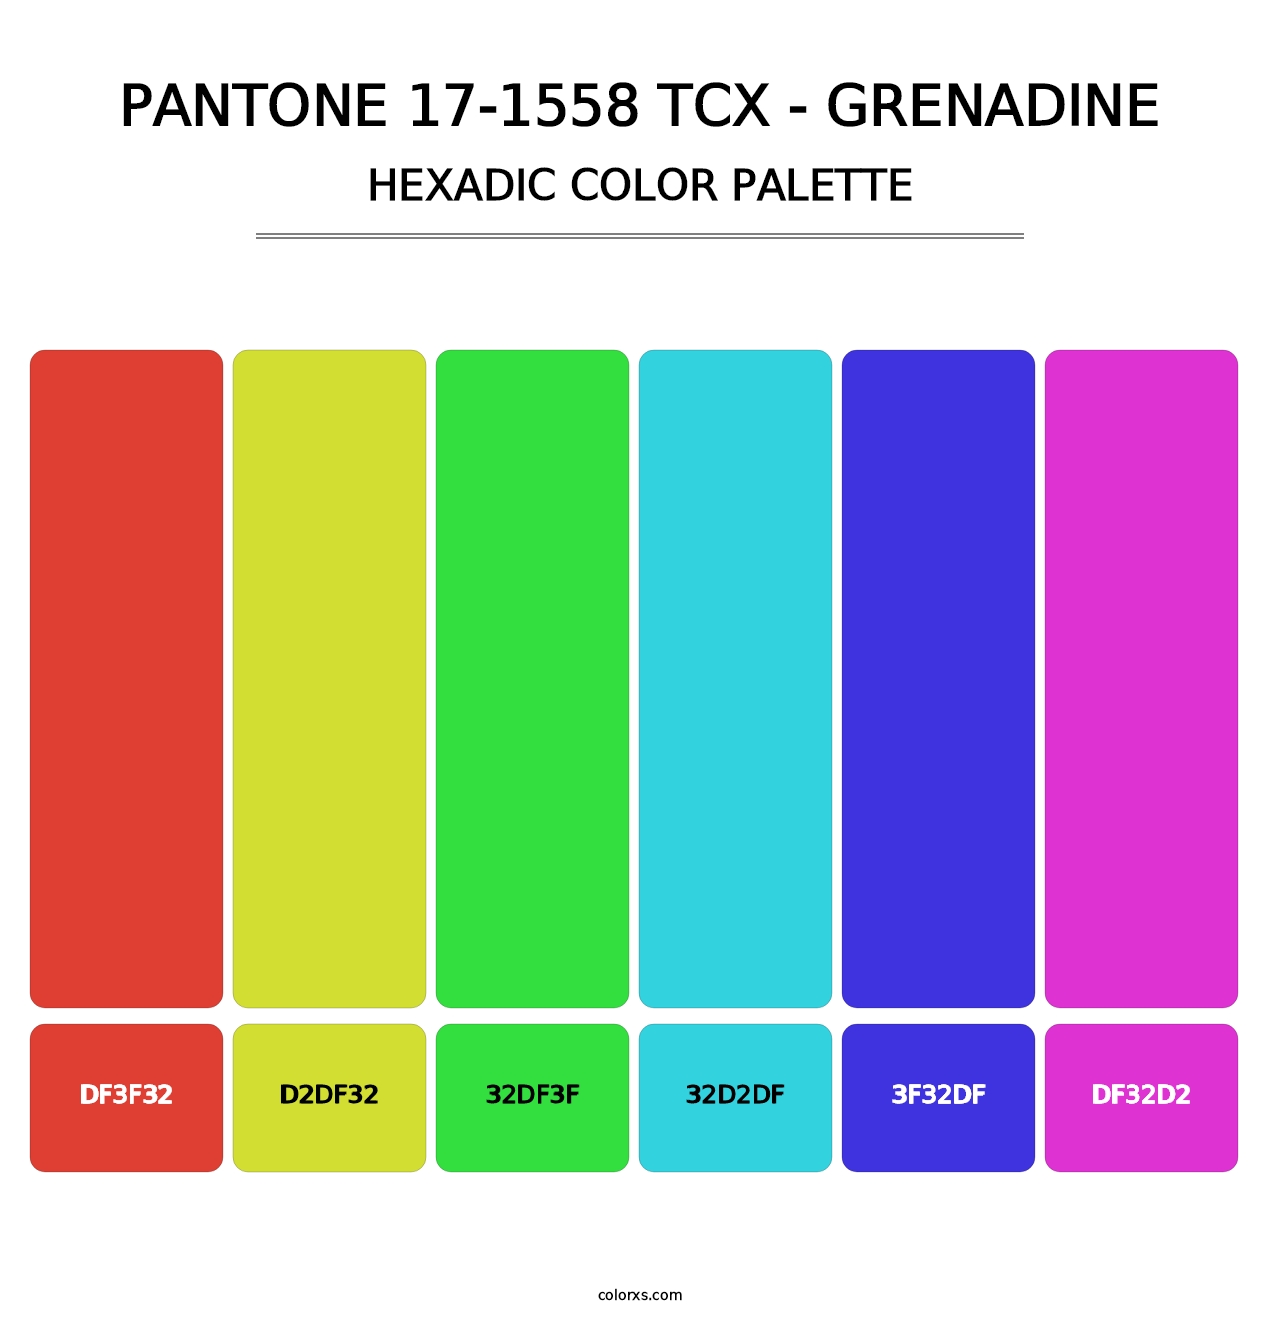 PANTONE 17-1558 TCX - Grenadine - Hexadic Color Palette